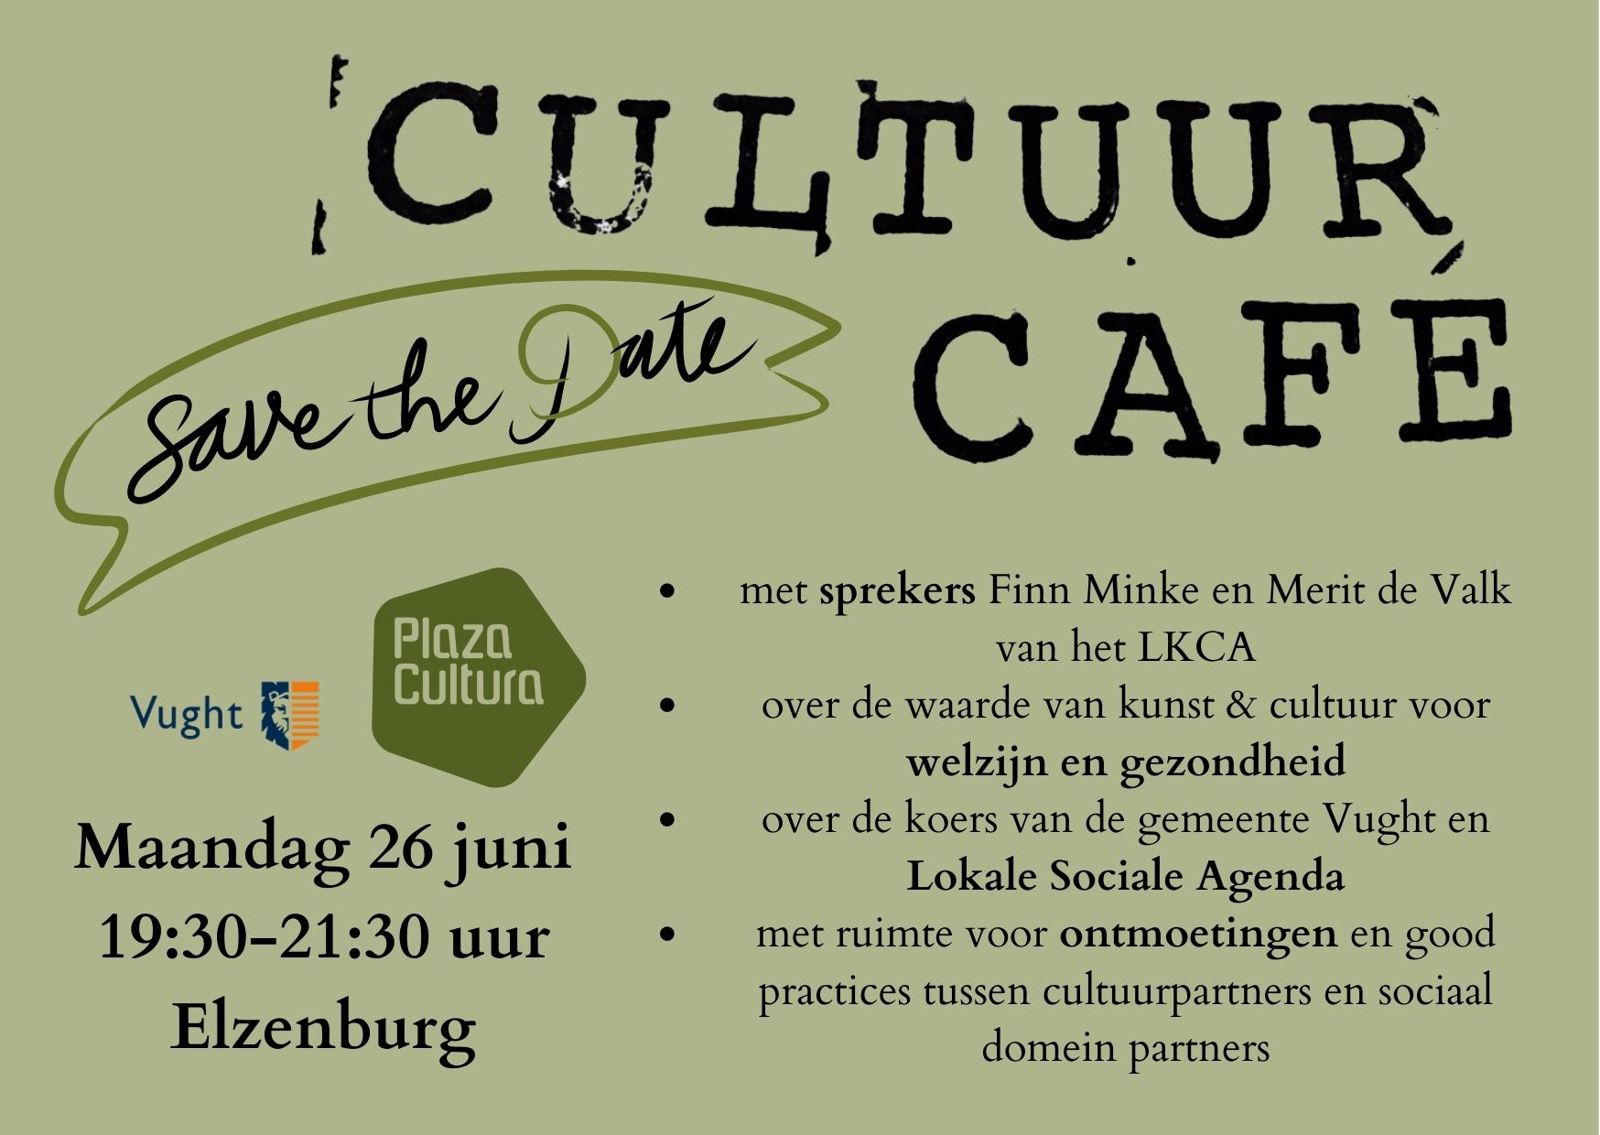 Cultuur Café Vught save the date